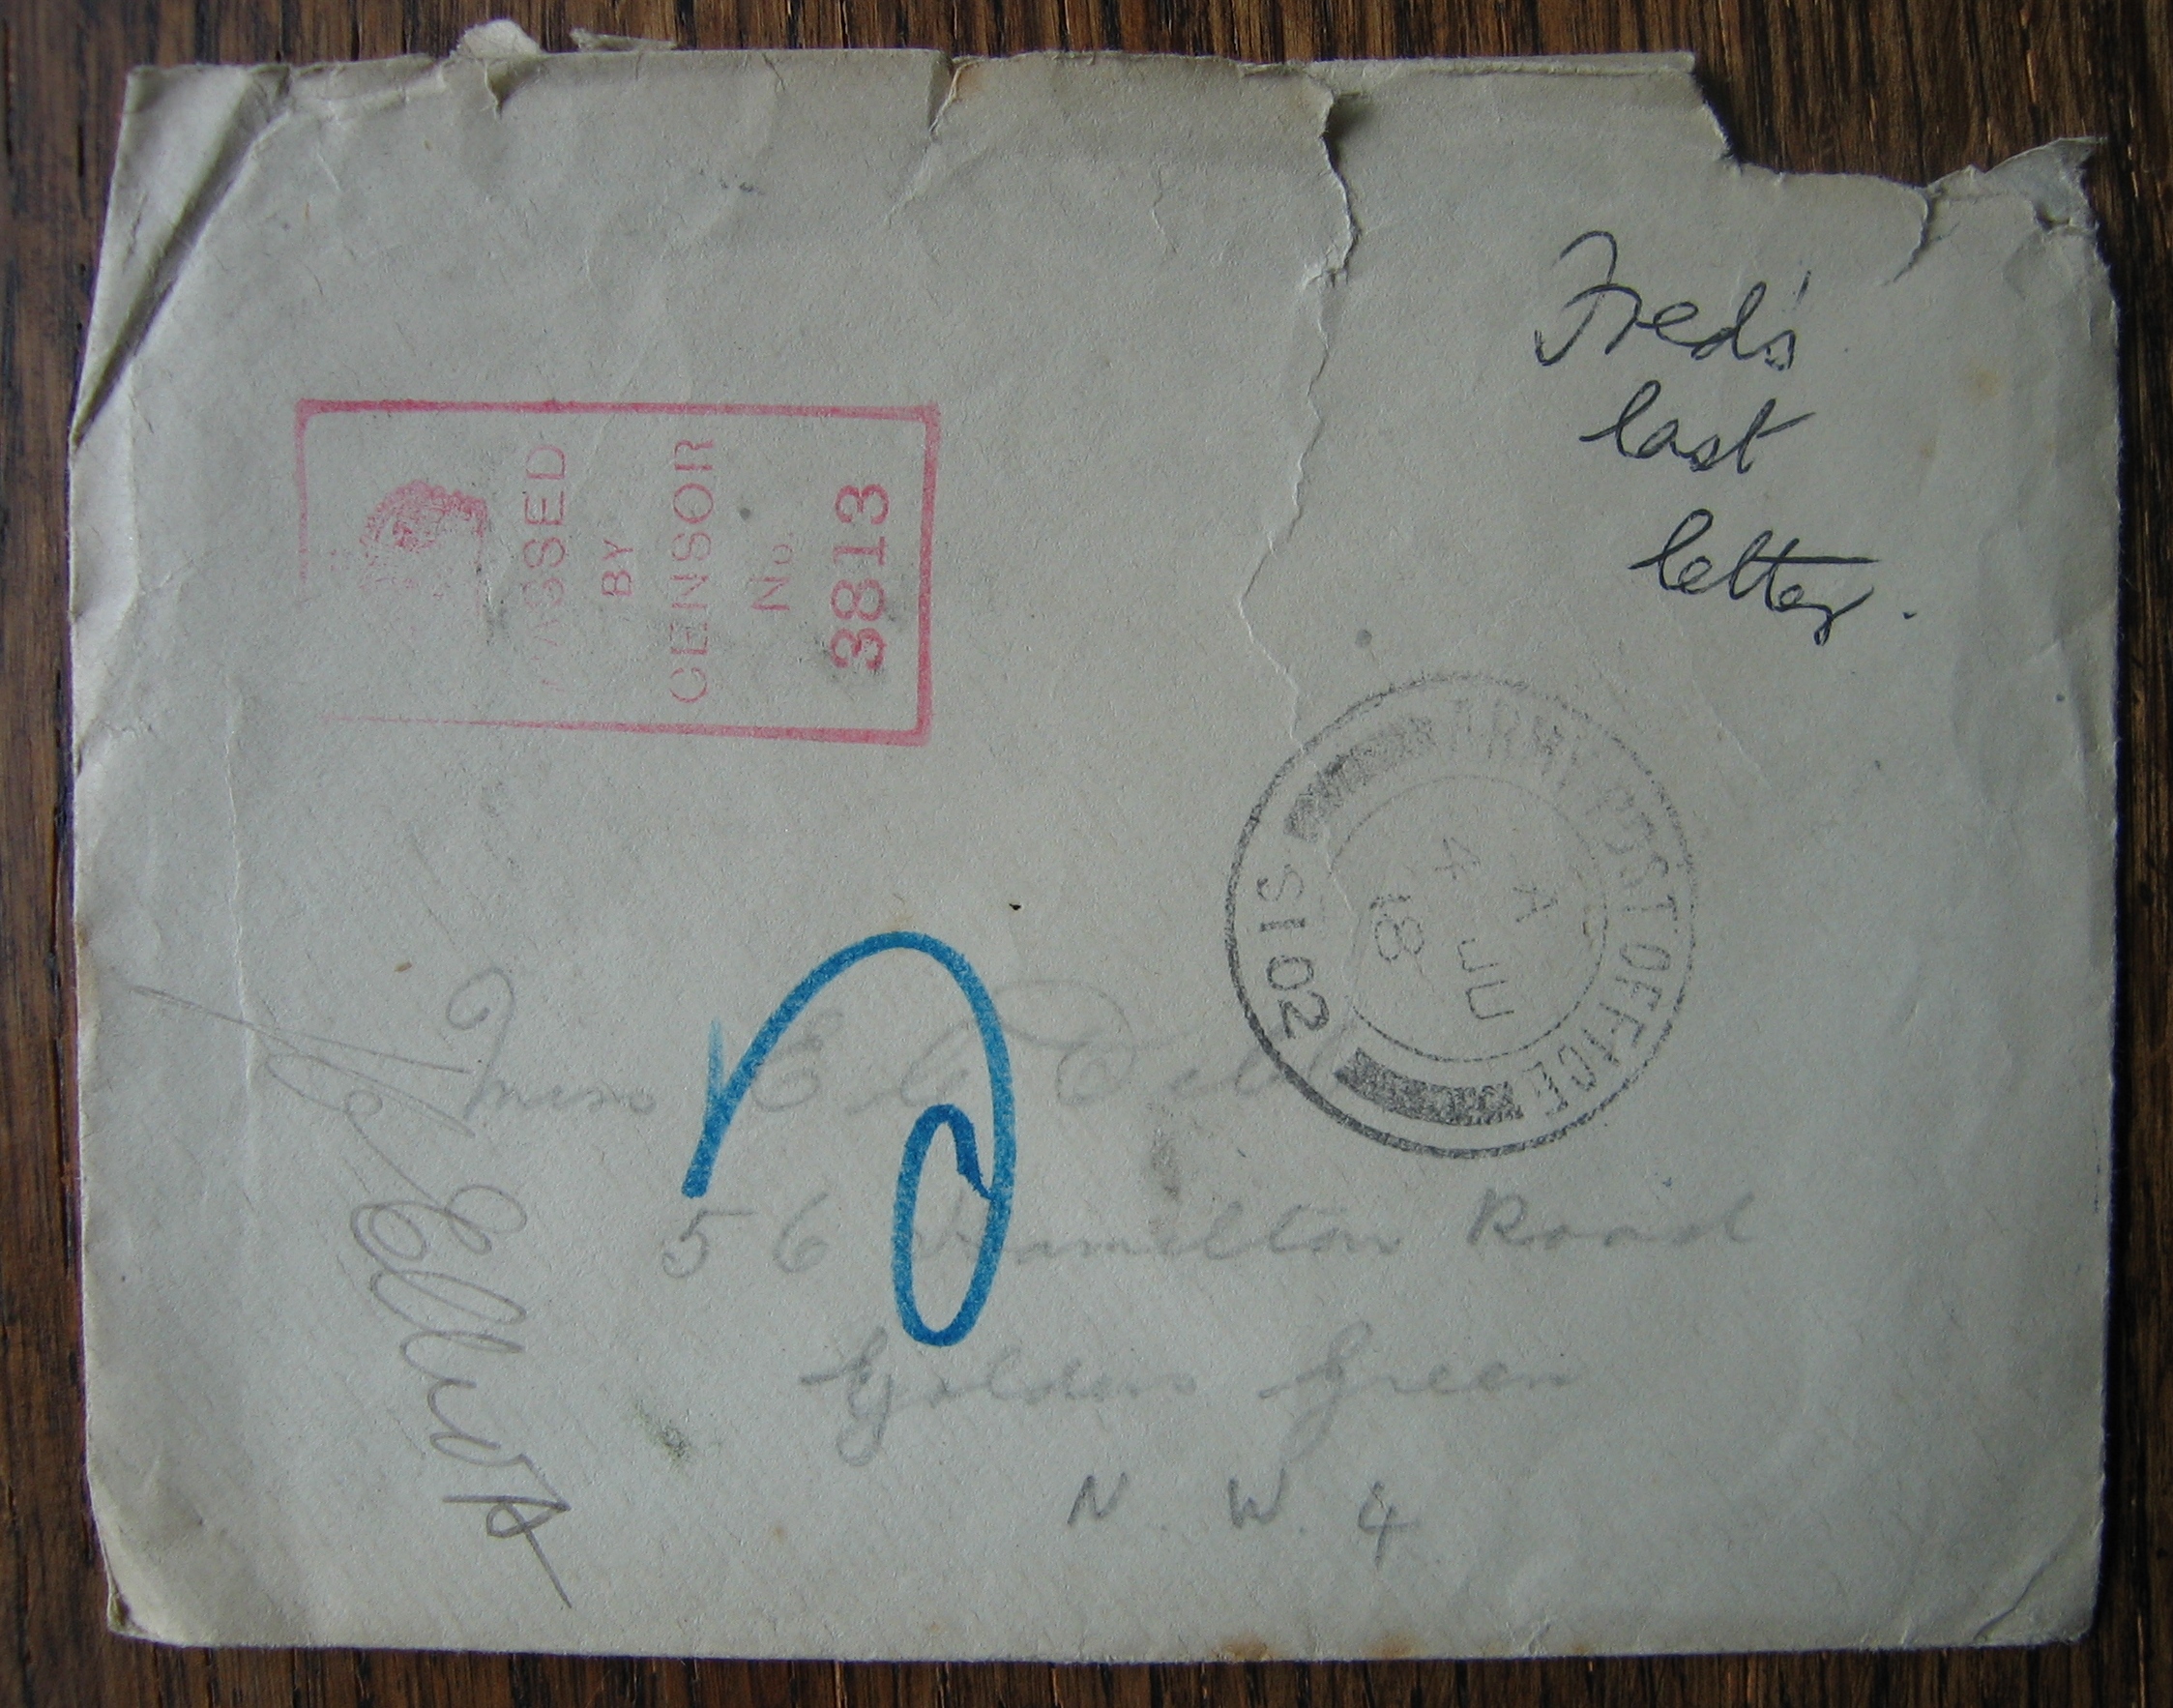 Envelope of Fred’s last letter to Ethel